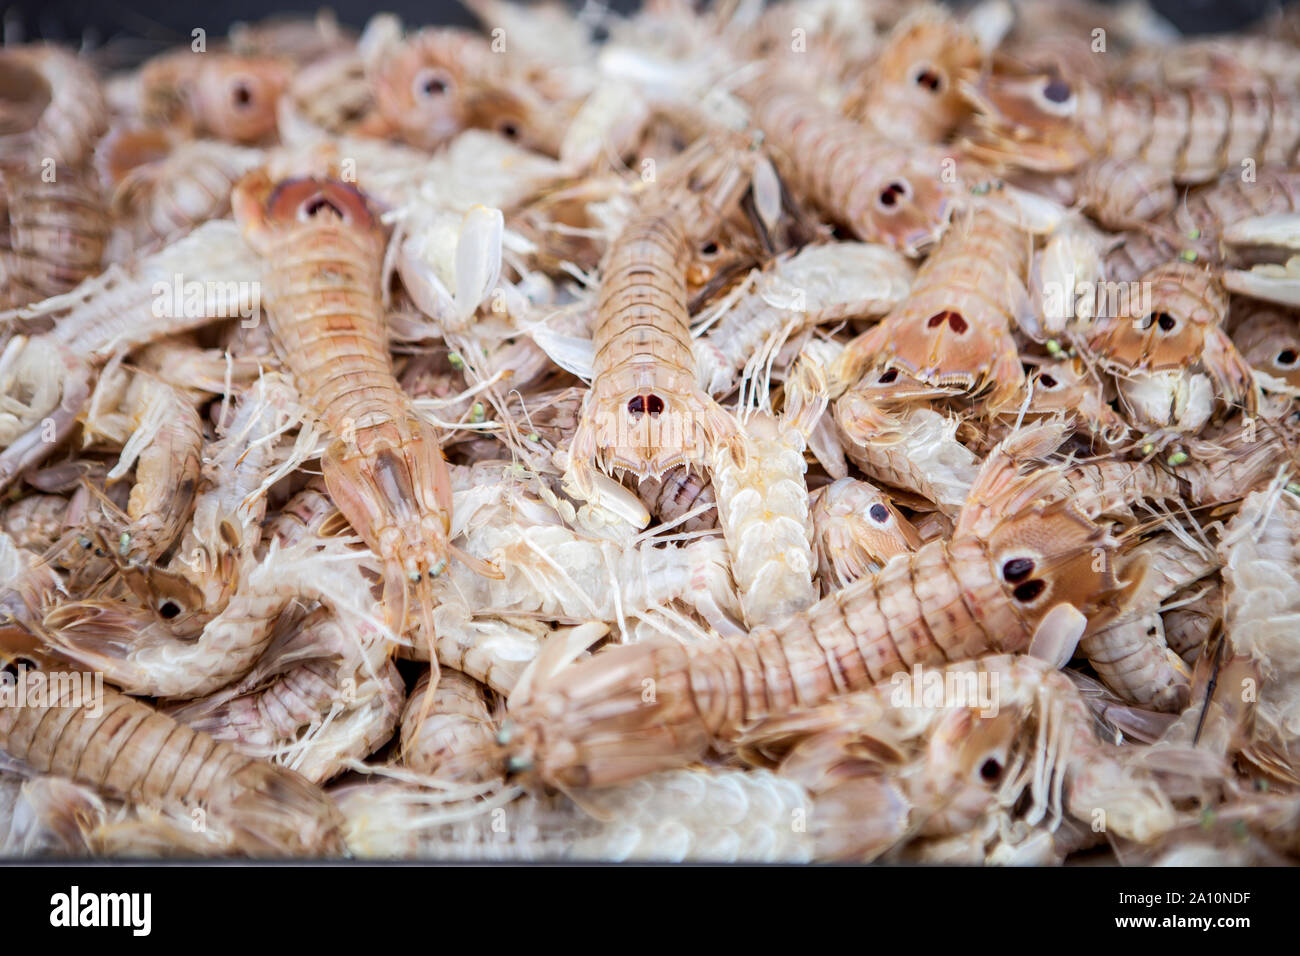 Many squilla mantis sold at the fish market of Catania Stock Photo